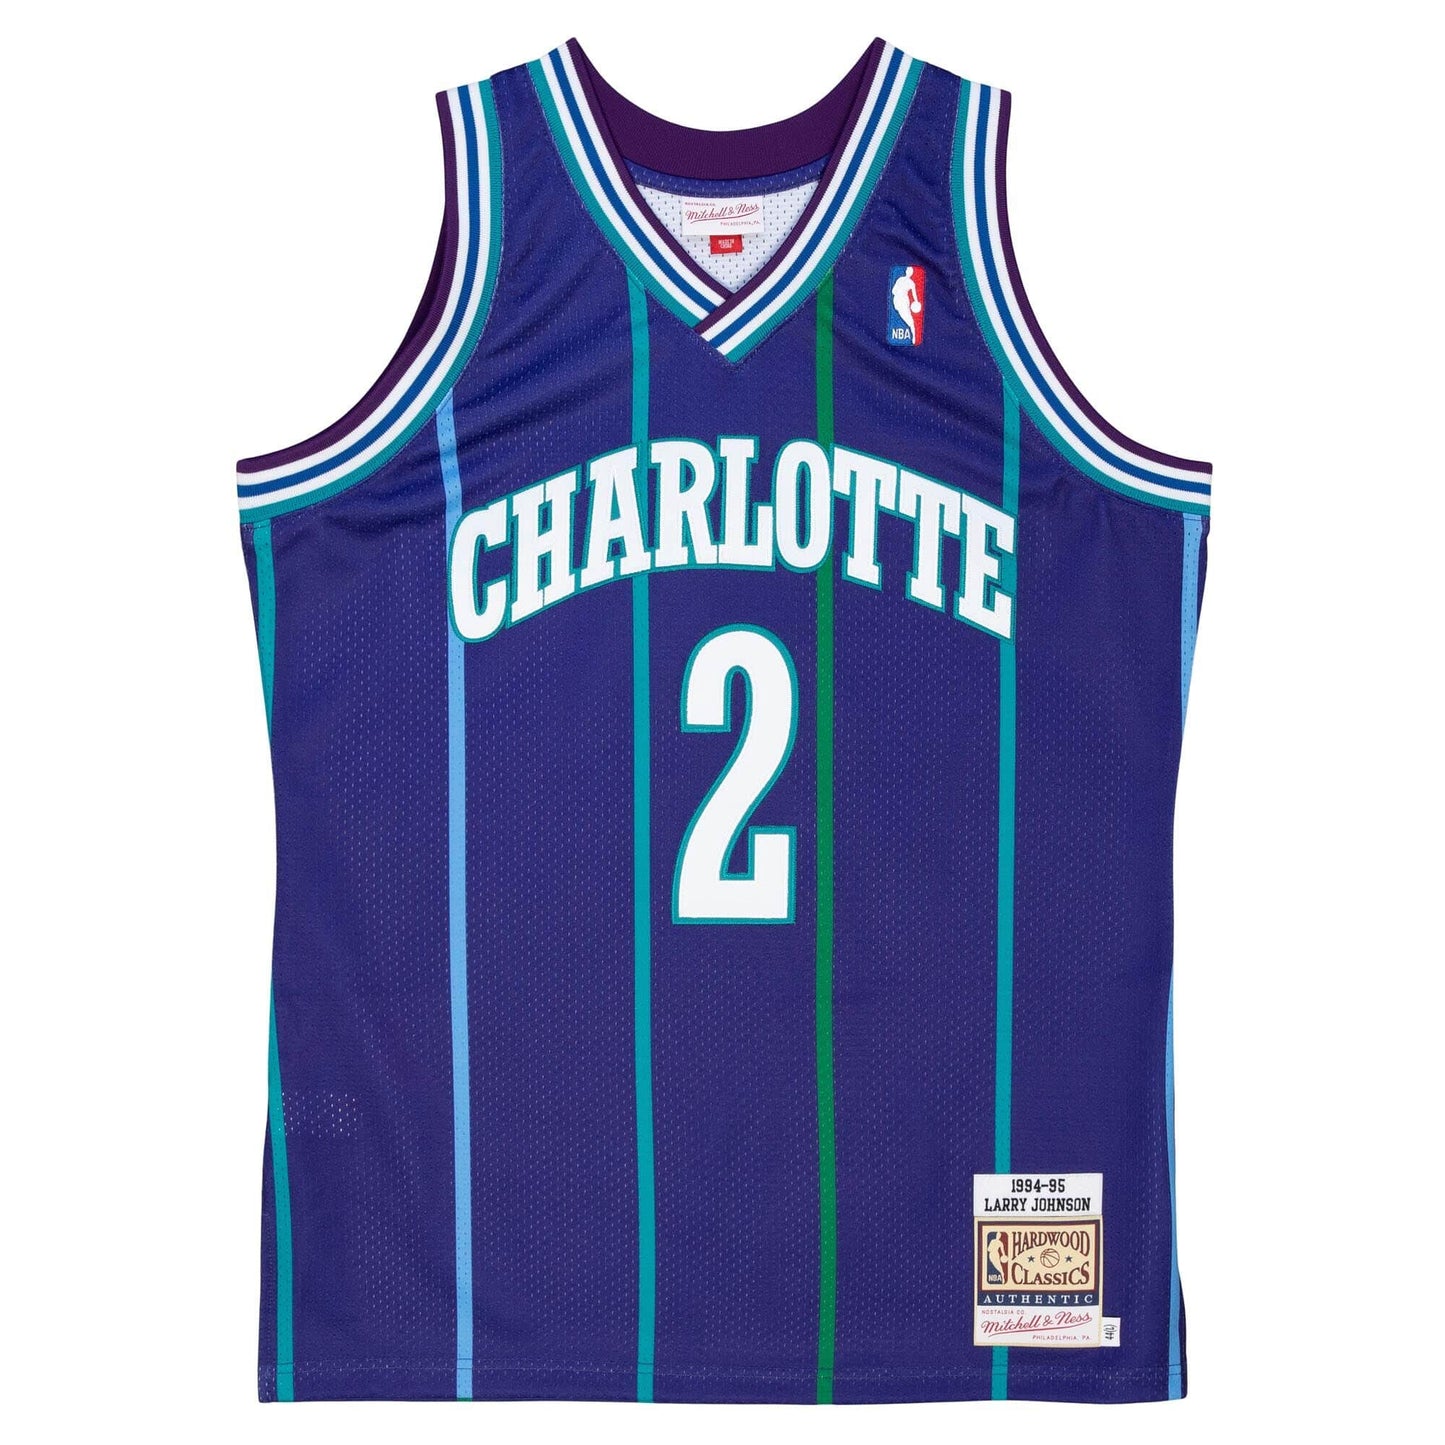 Authentic Larry Johnson Charlotte Hornets Alternate 1994-95 Jersey